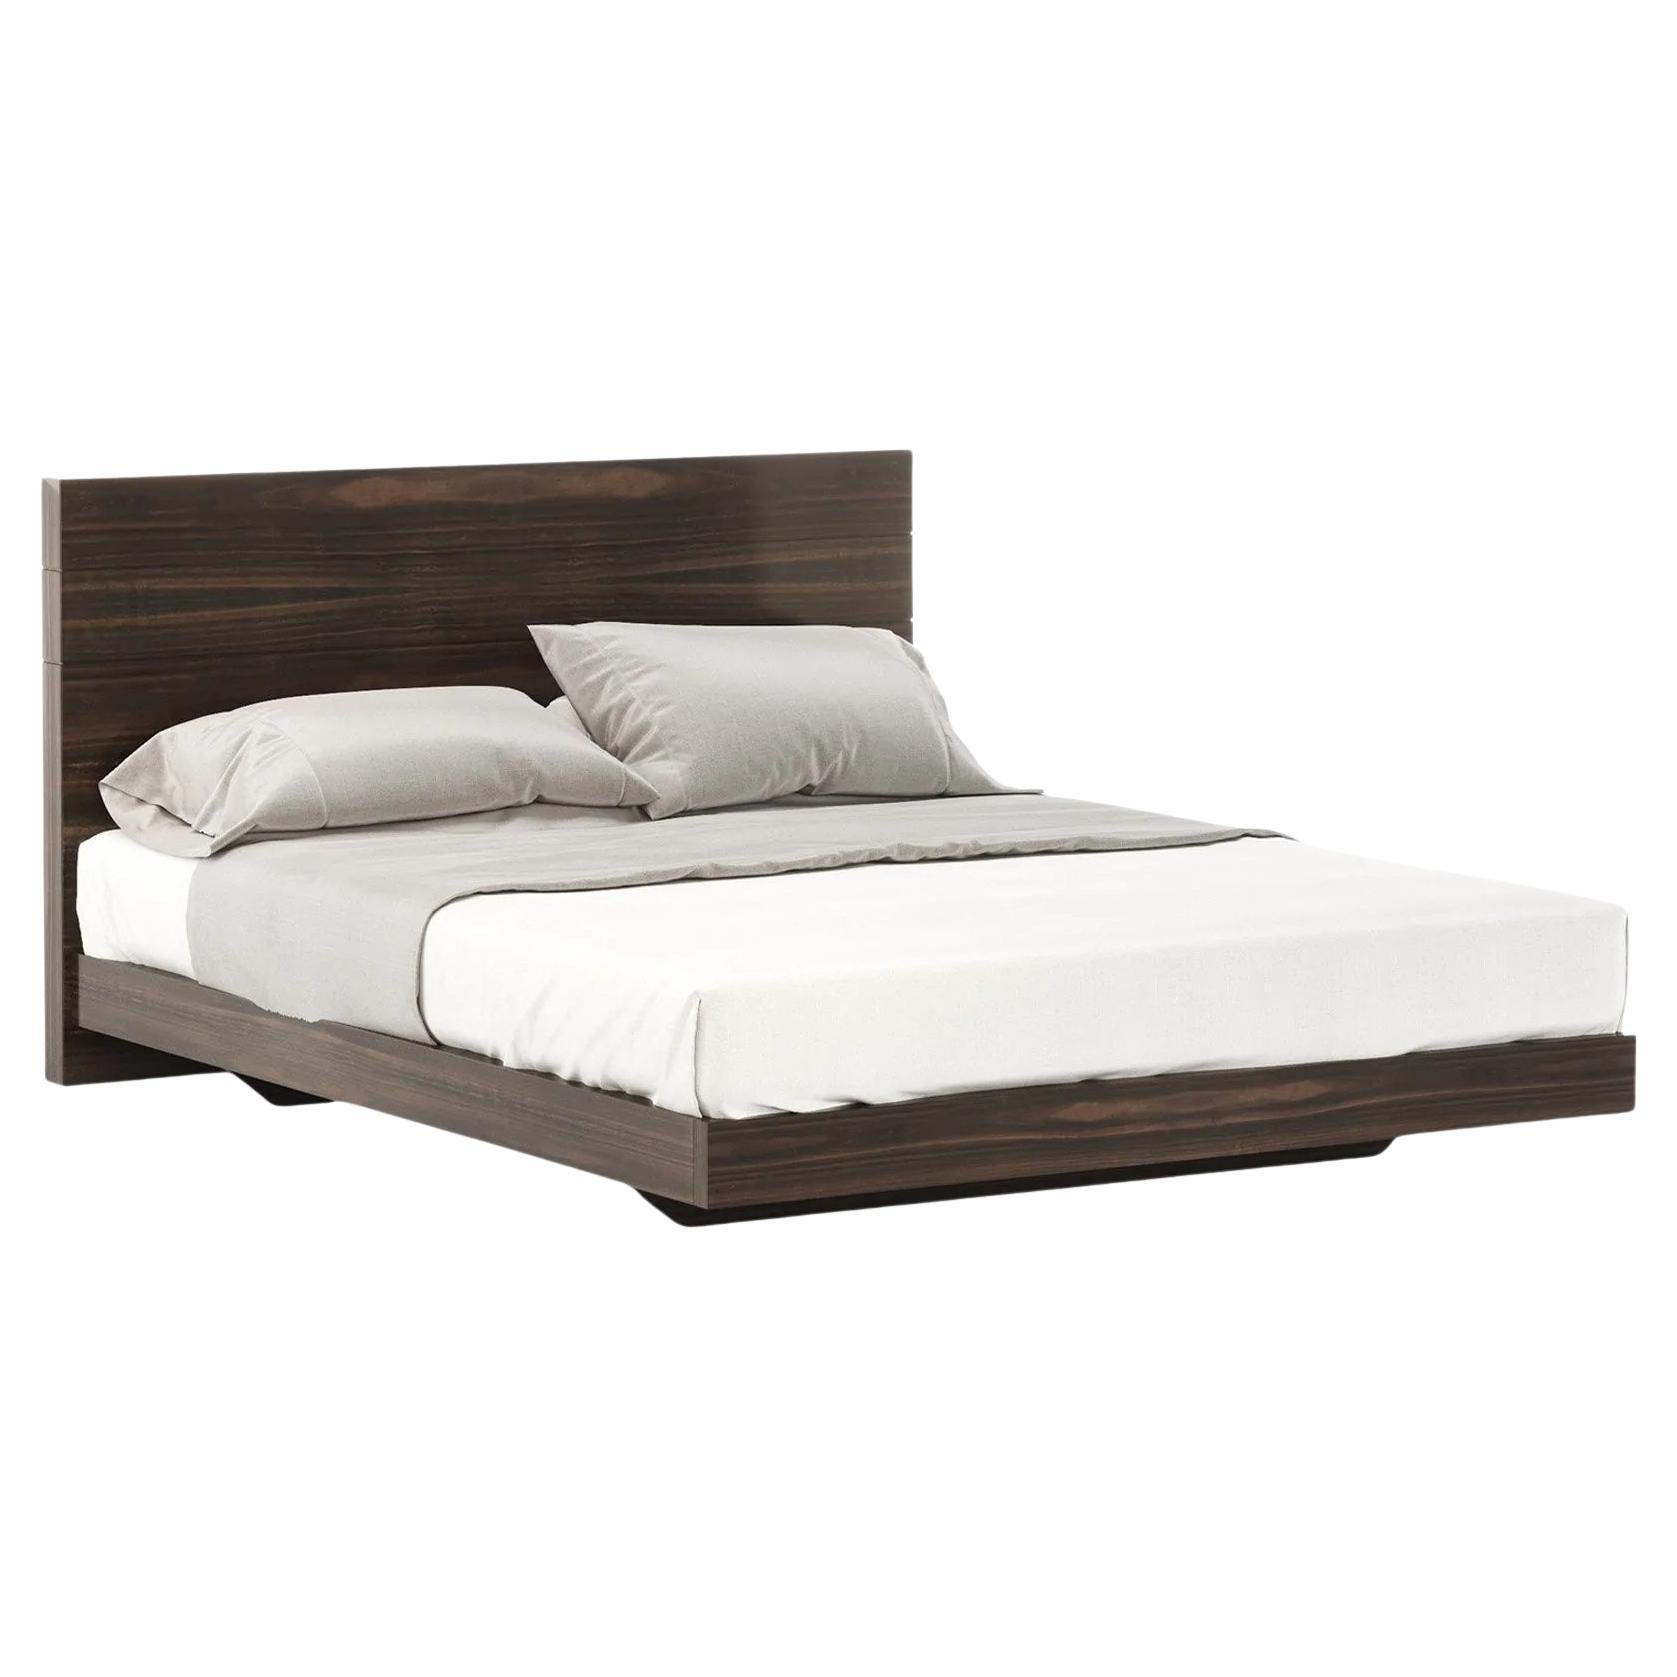 American Queen Size Bed Featuring a Wood Veneer Headboard